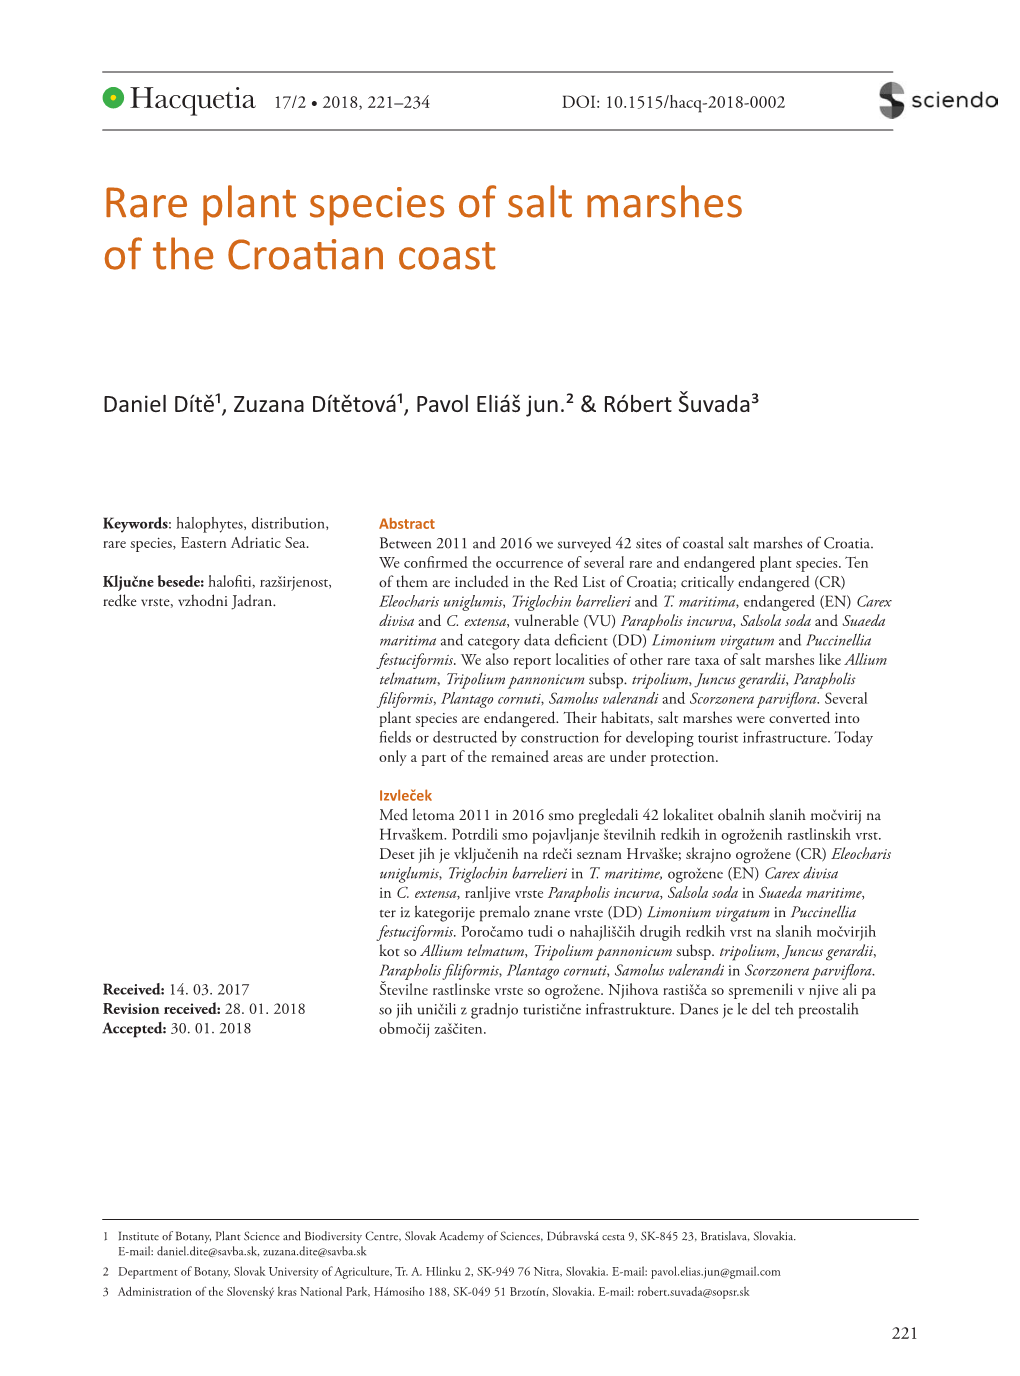 Rare Plant Species of Salt Marshes of the Croatian Coast